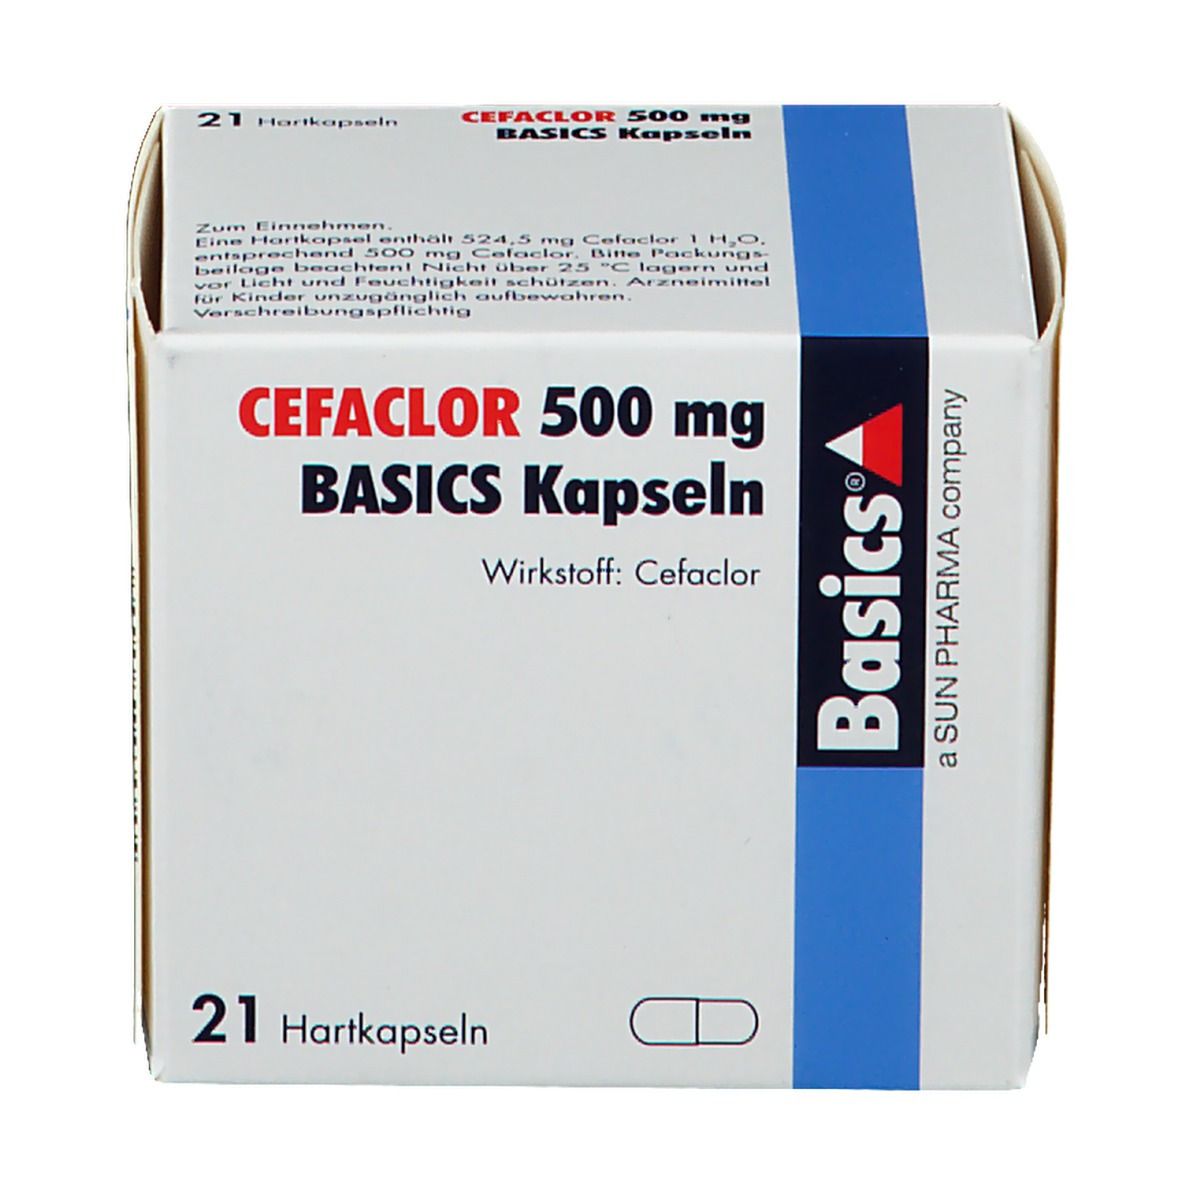 CEFACLOR 500 mg BASICS